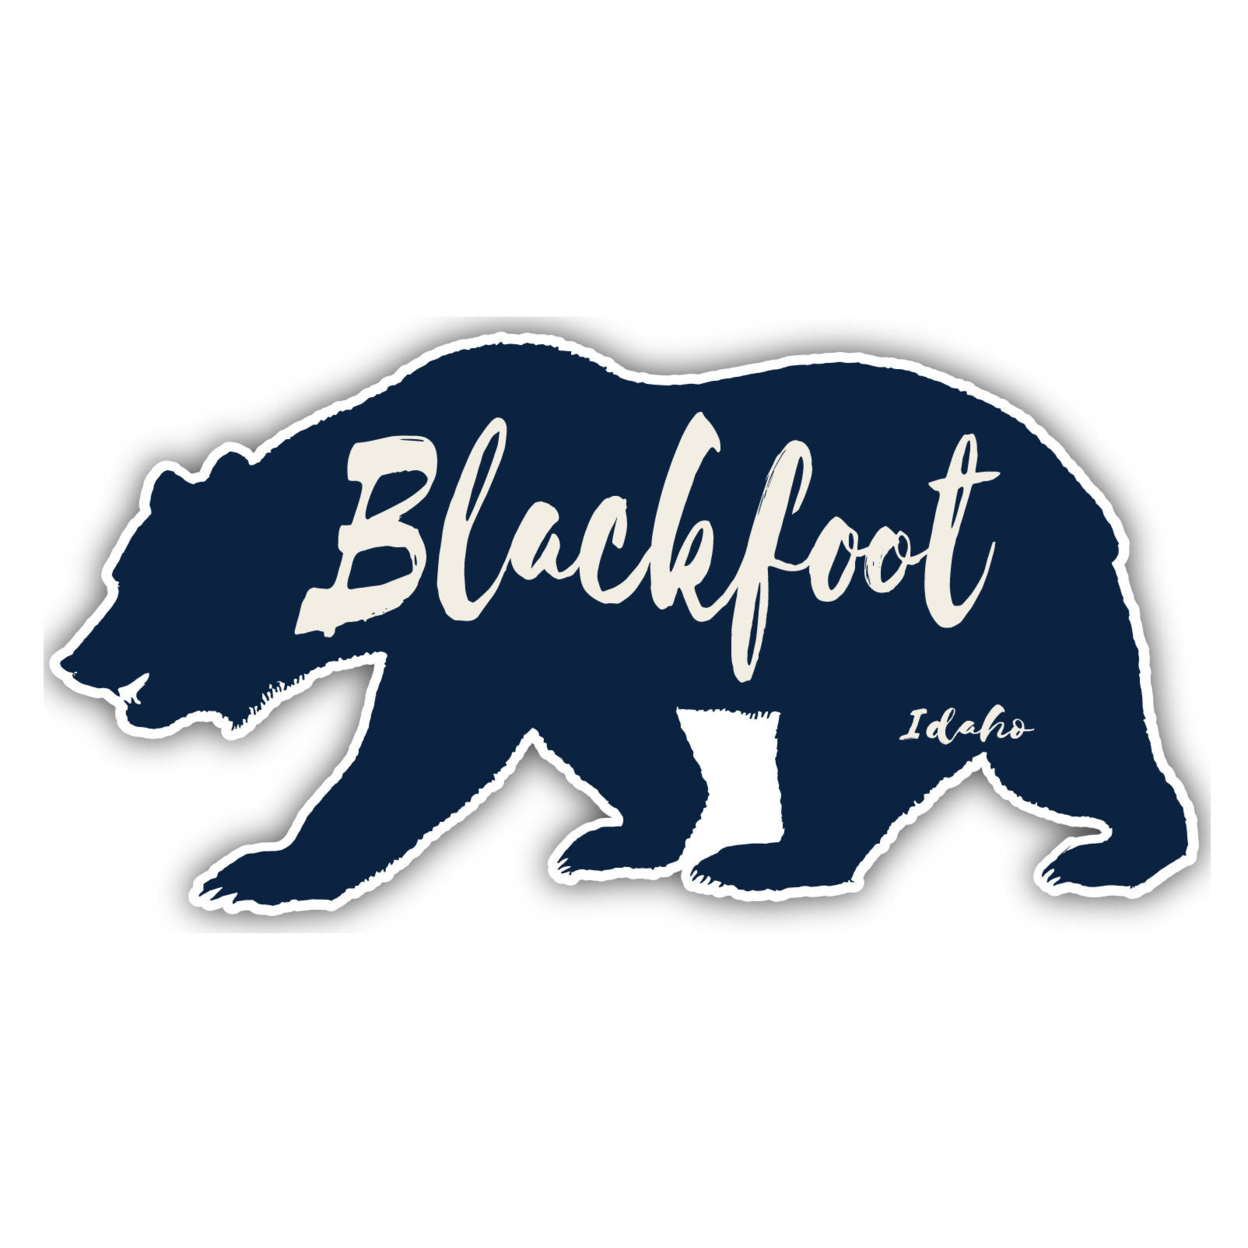 Blackfoot Idaho Souvenir Decorative Stickers (Choose Theme And Size) - 4-Pack, 12-Inch, Bear